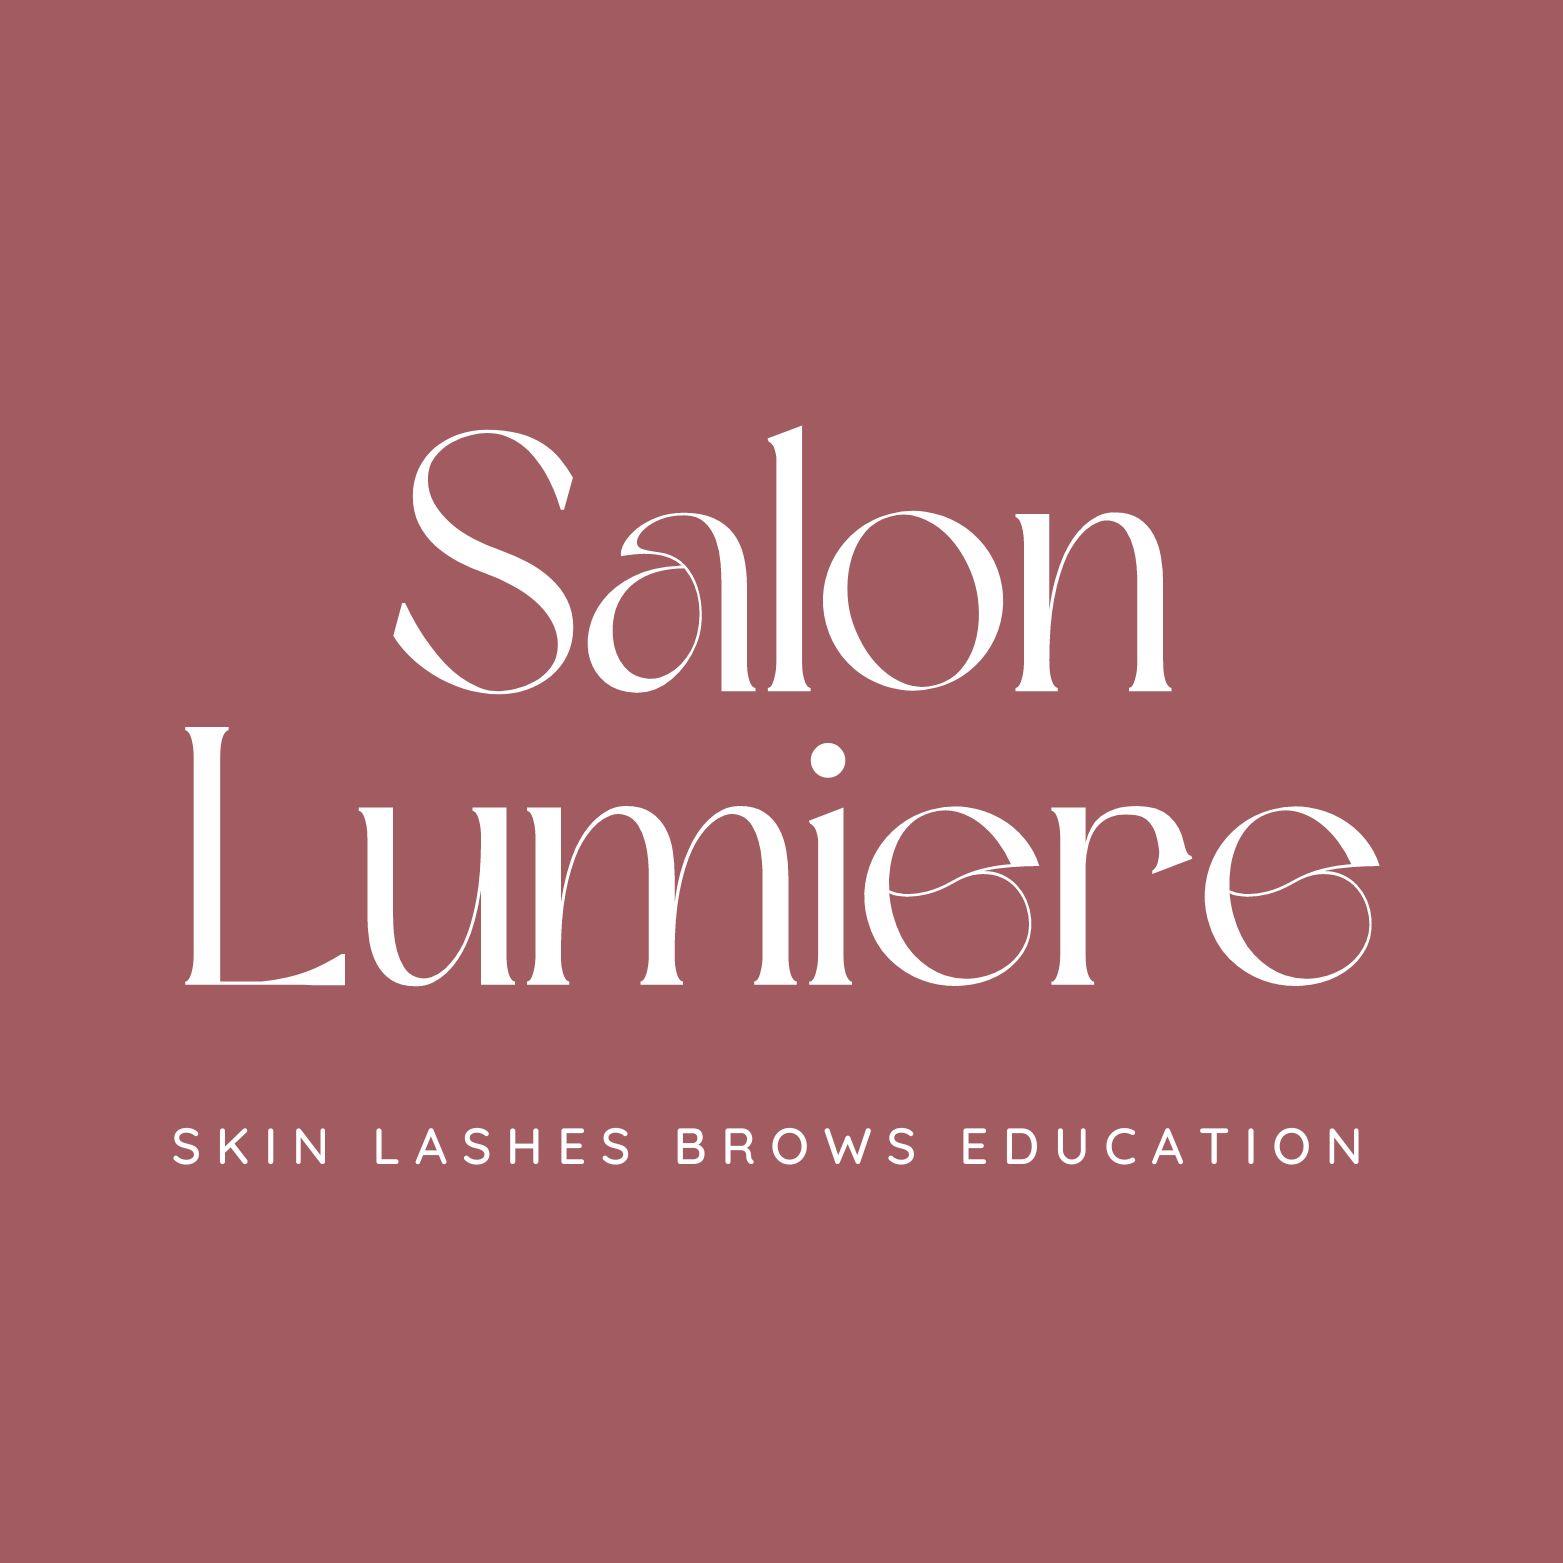 Lumiere Salon – The Beauty Salon